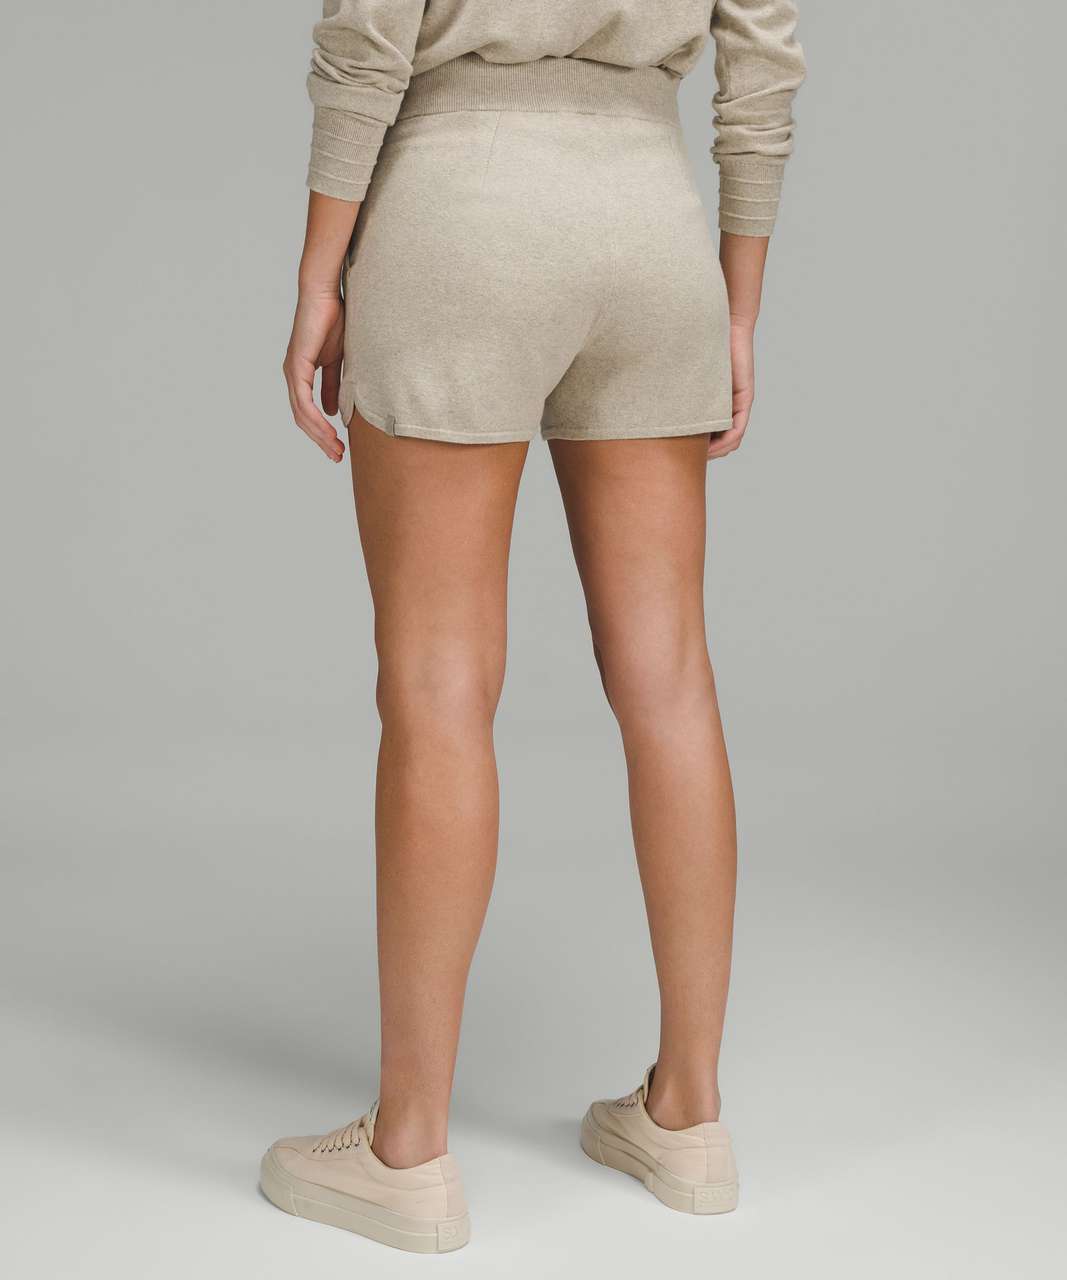 Lululemon Cotton-Cashmere Knit High-Rise Short 4" - Heathered Raw Linen